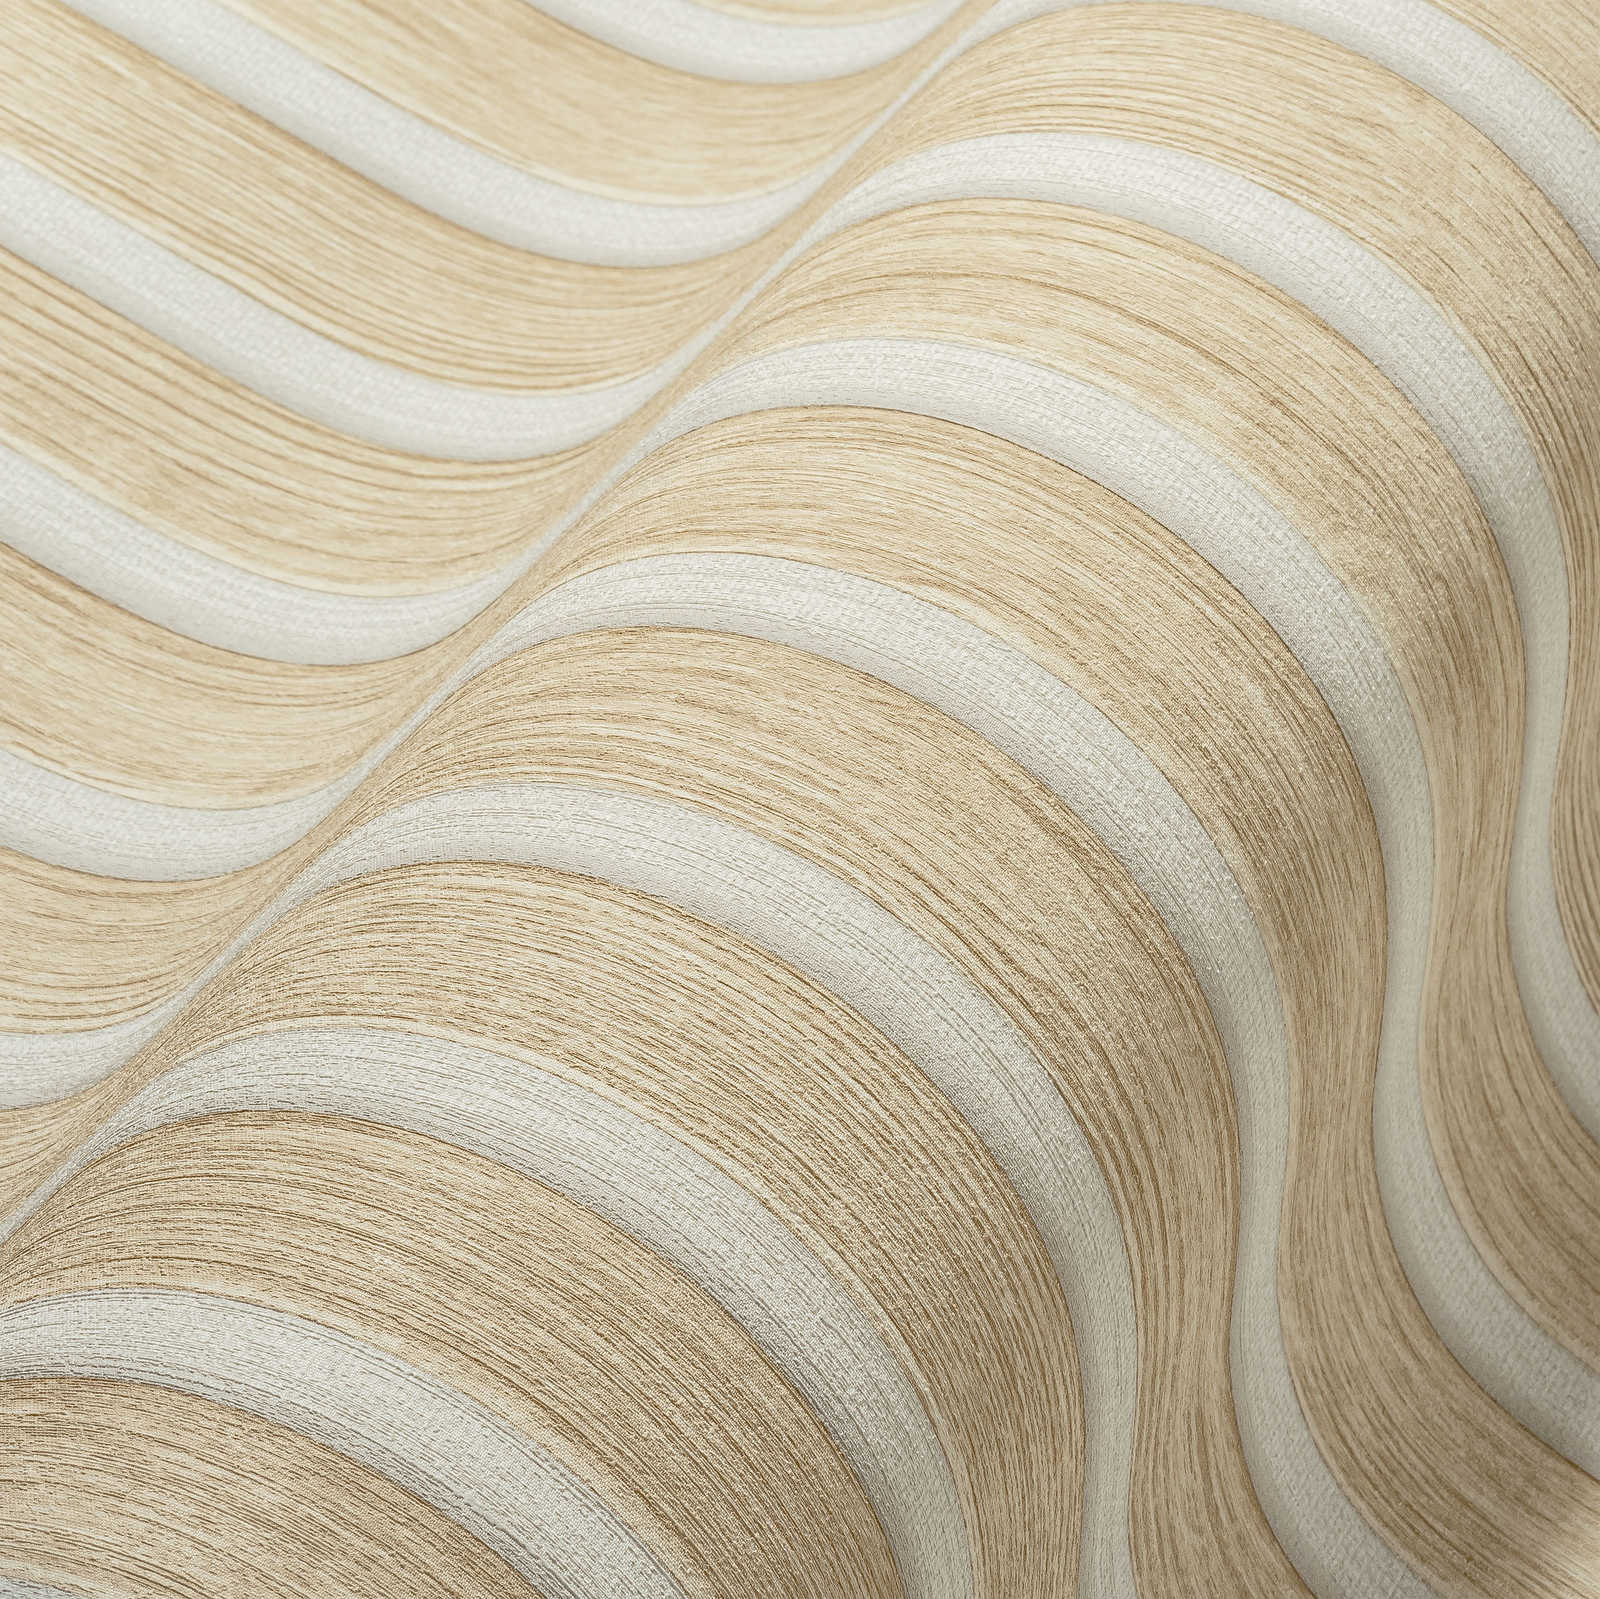             Papel pintado de madera con aspecto de panel acústico - beige, blanco
        